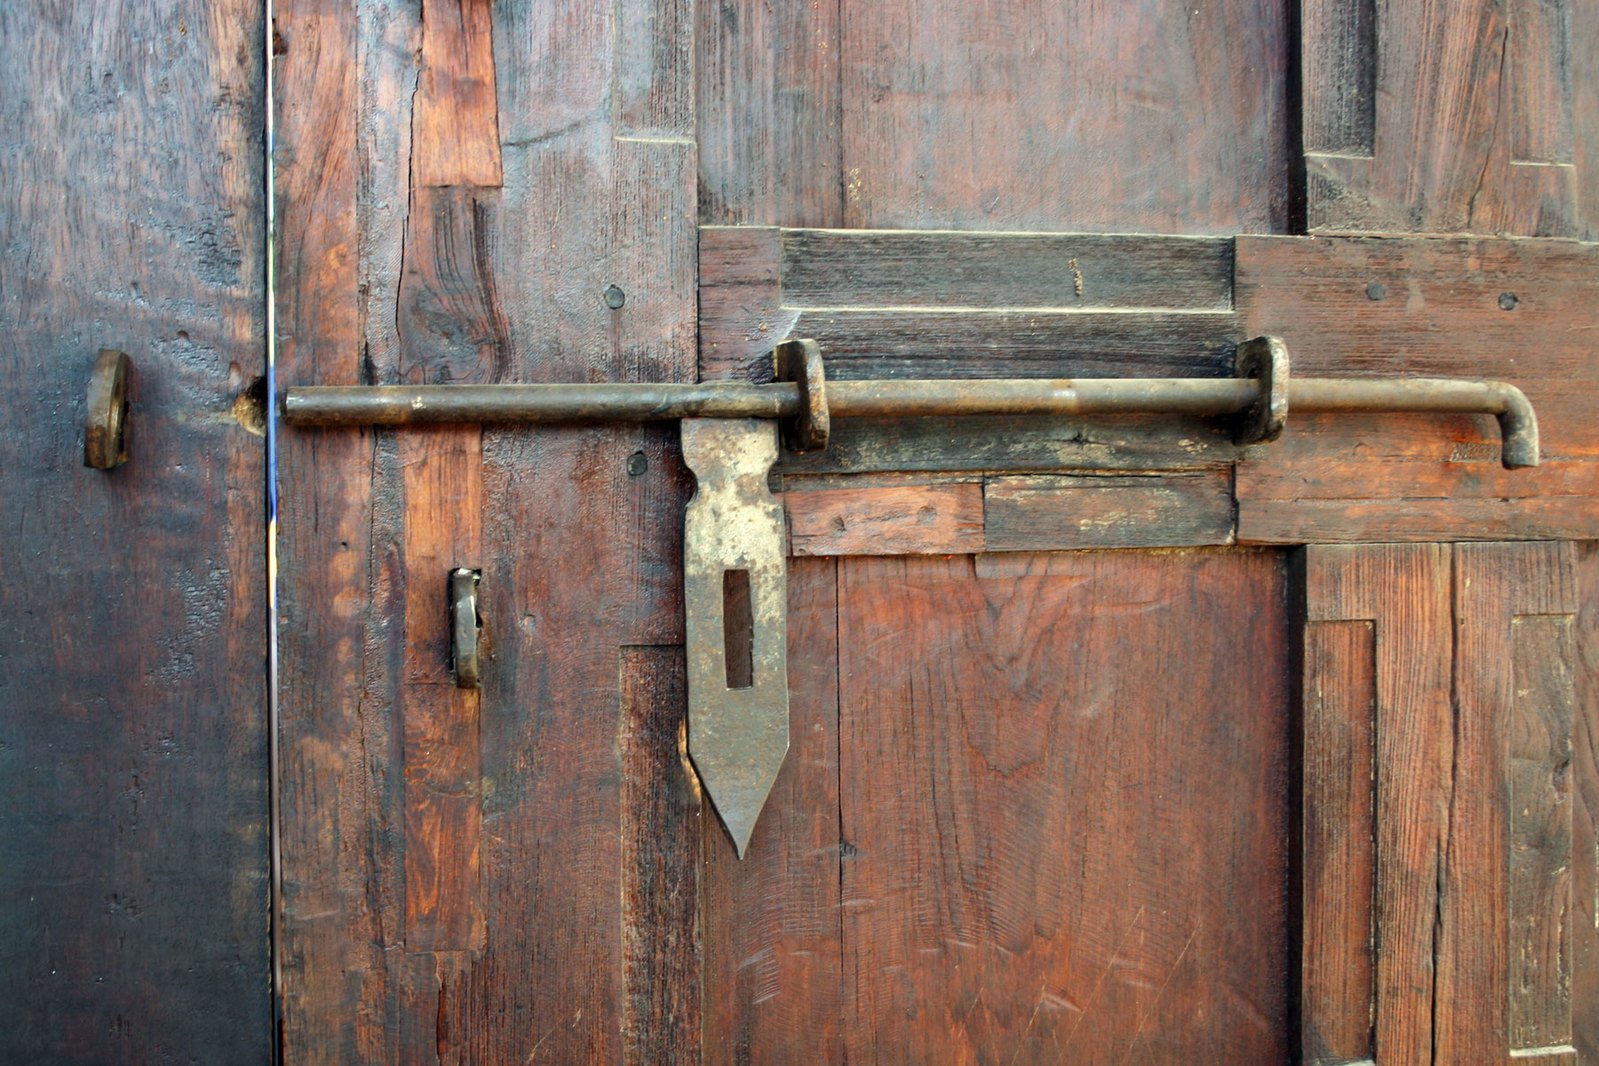 the large wooden door has a long metal bar